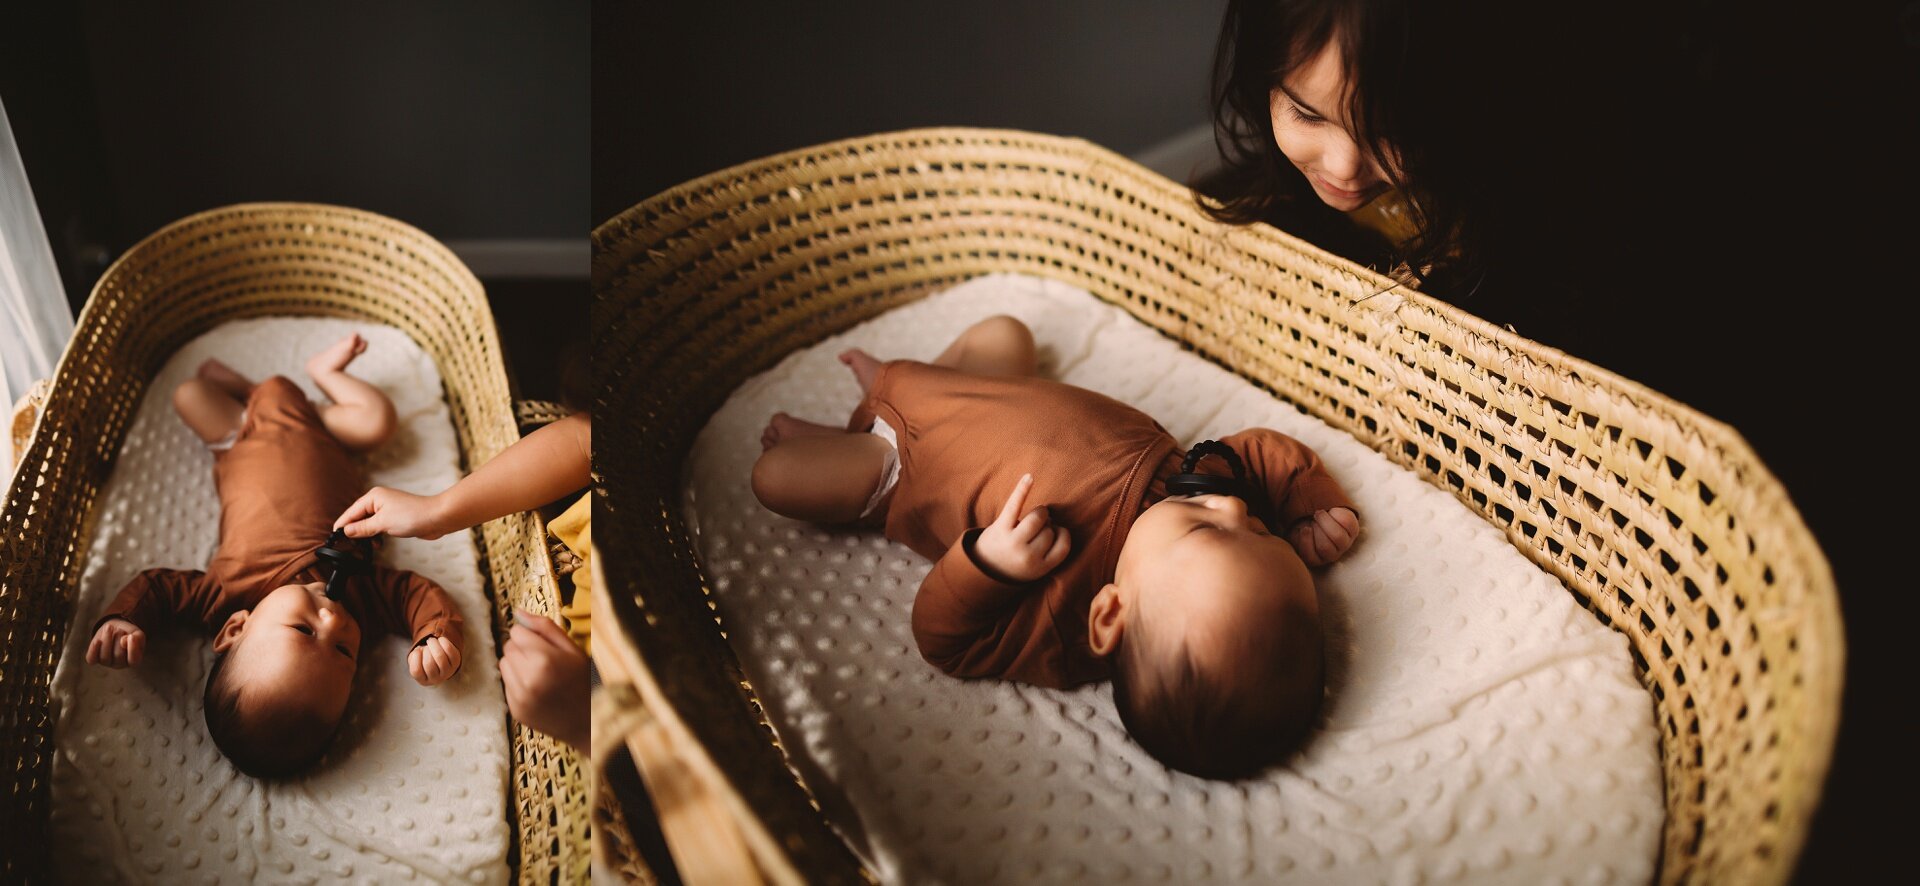 lifestyle newborn baby photo shoot, st pete fl 